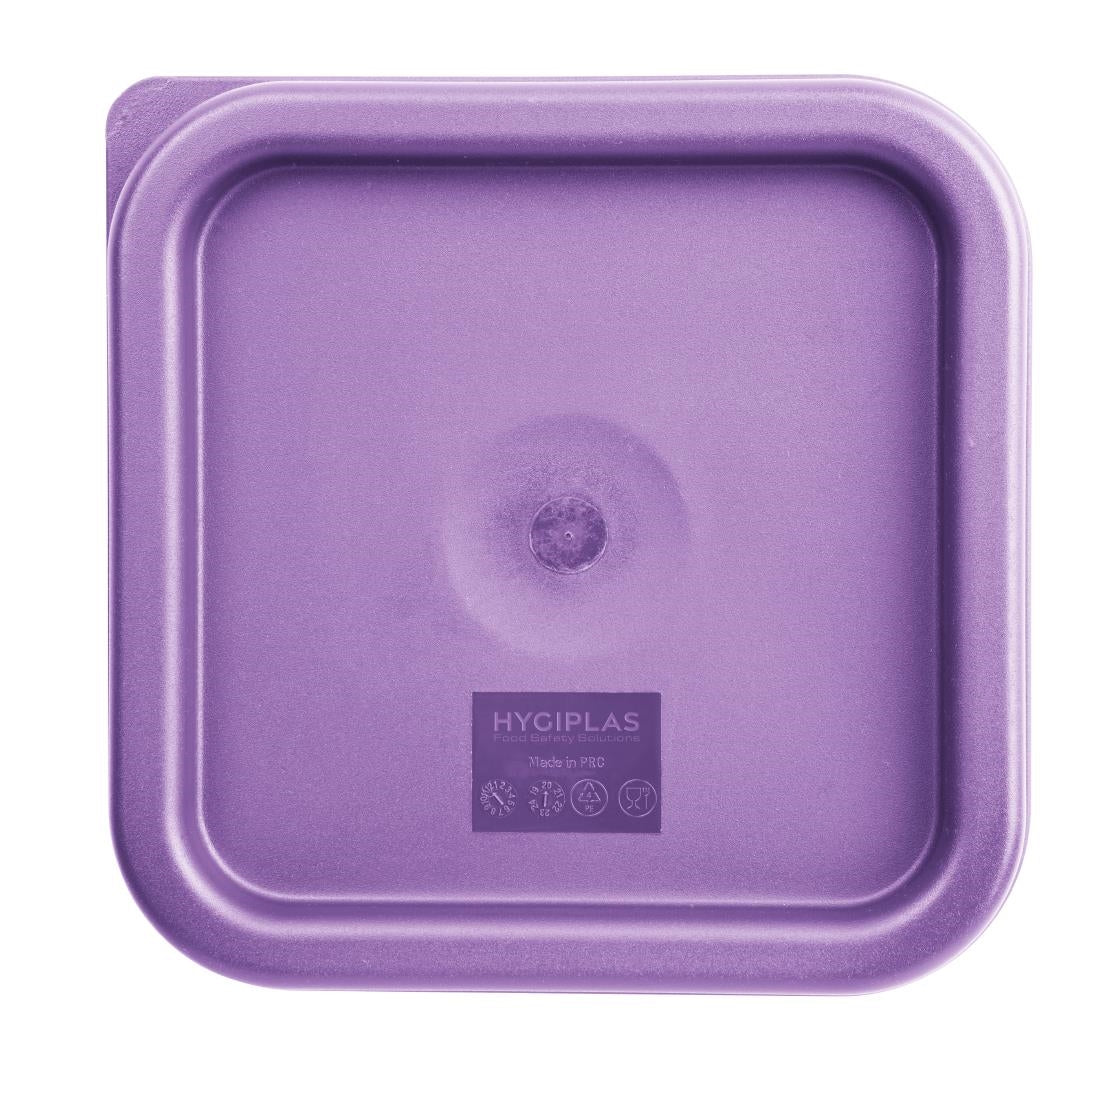 FX143 Hygiplas Square Food Storage Container Lid Purple Small